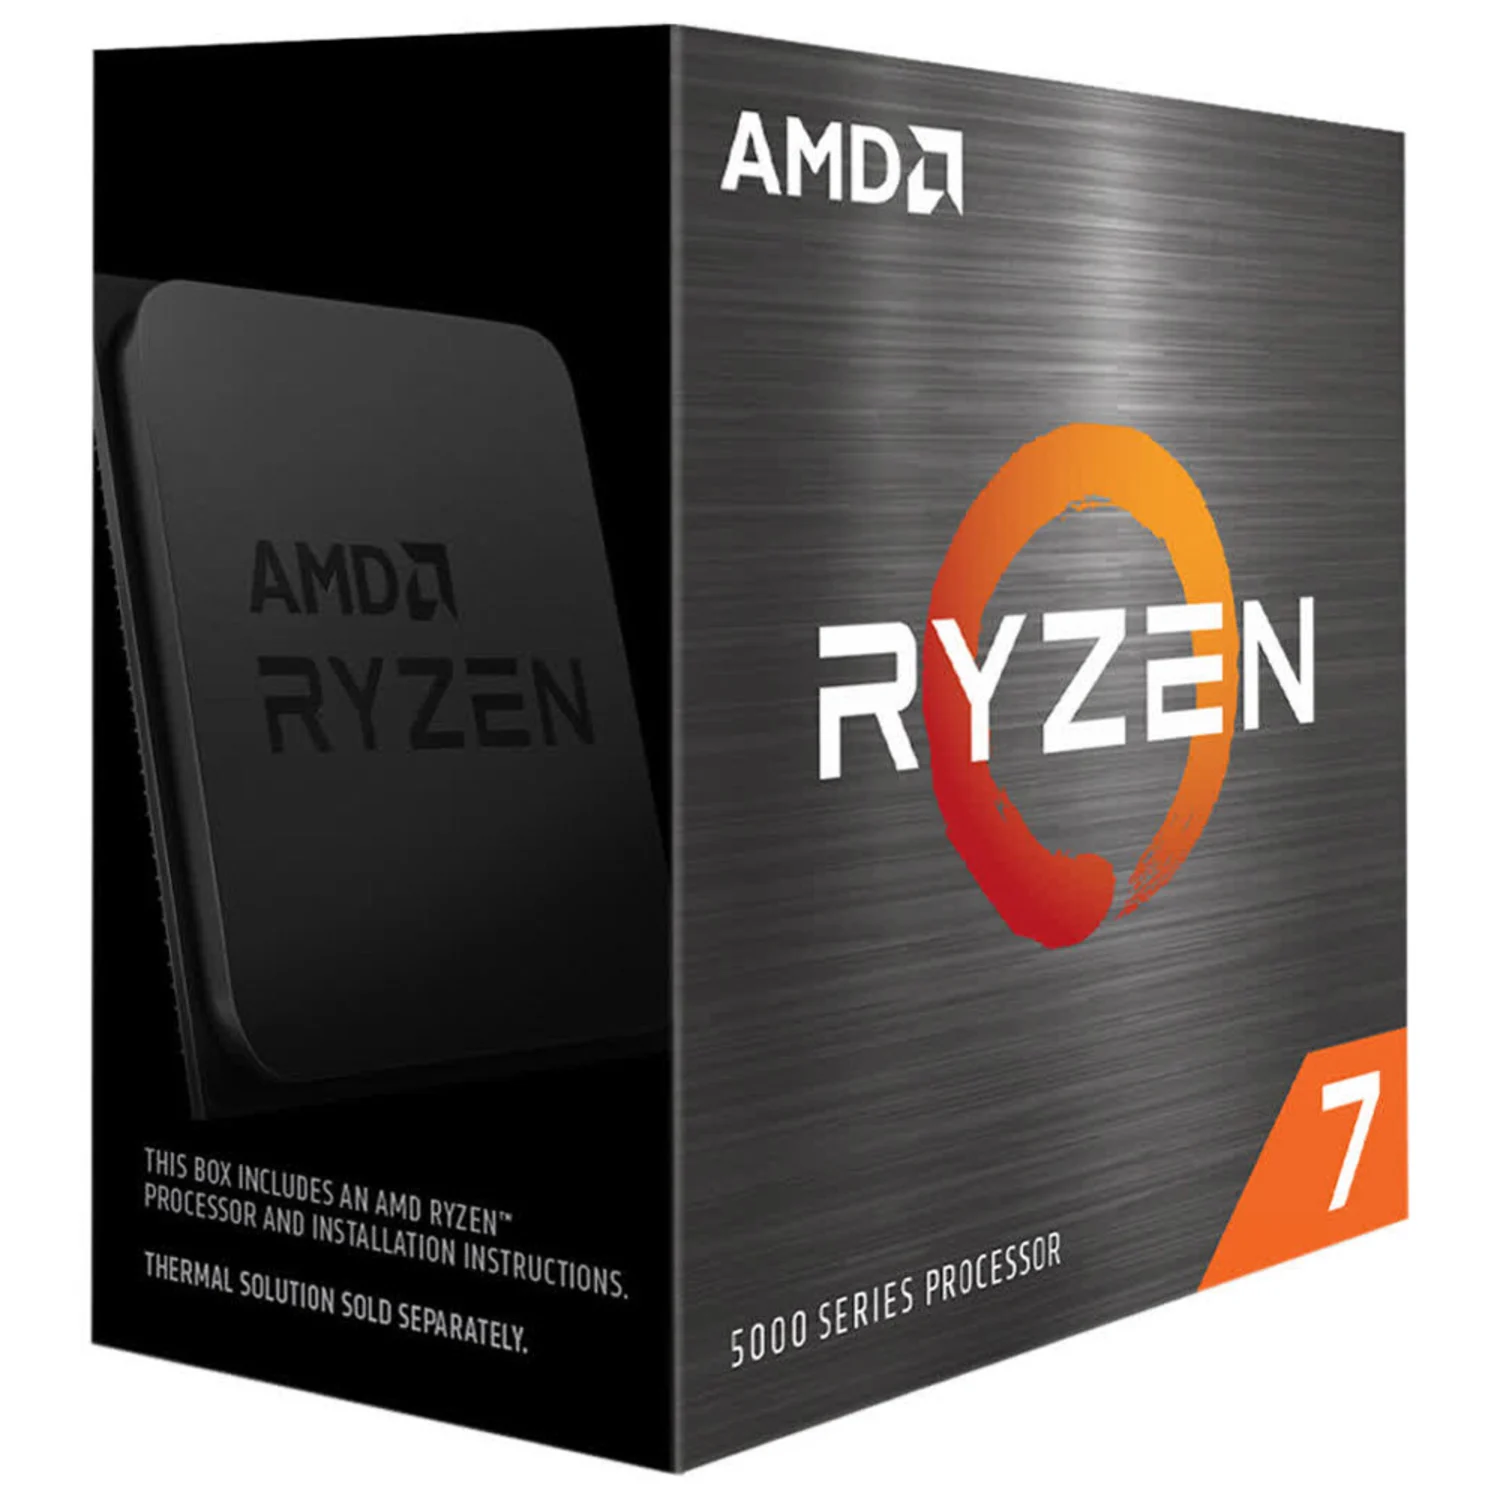 Processador AMD Ryzen 7 5800X Socket AM4 8 Core 16 Threads 3.8GHz e 4.7GHz Turbo Cache 36MB